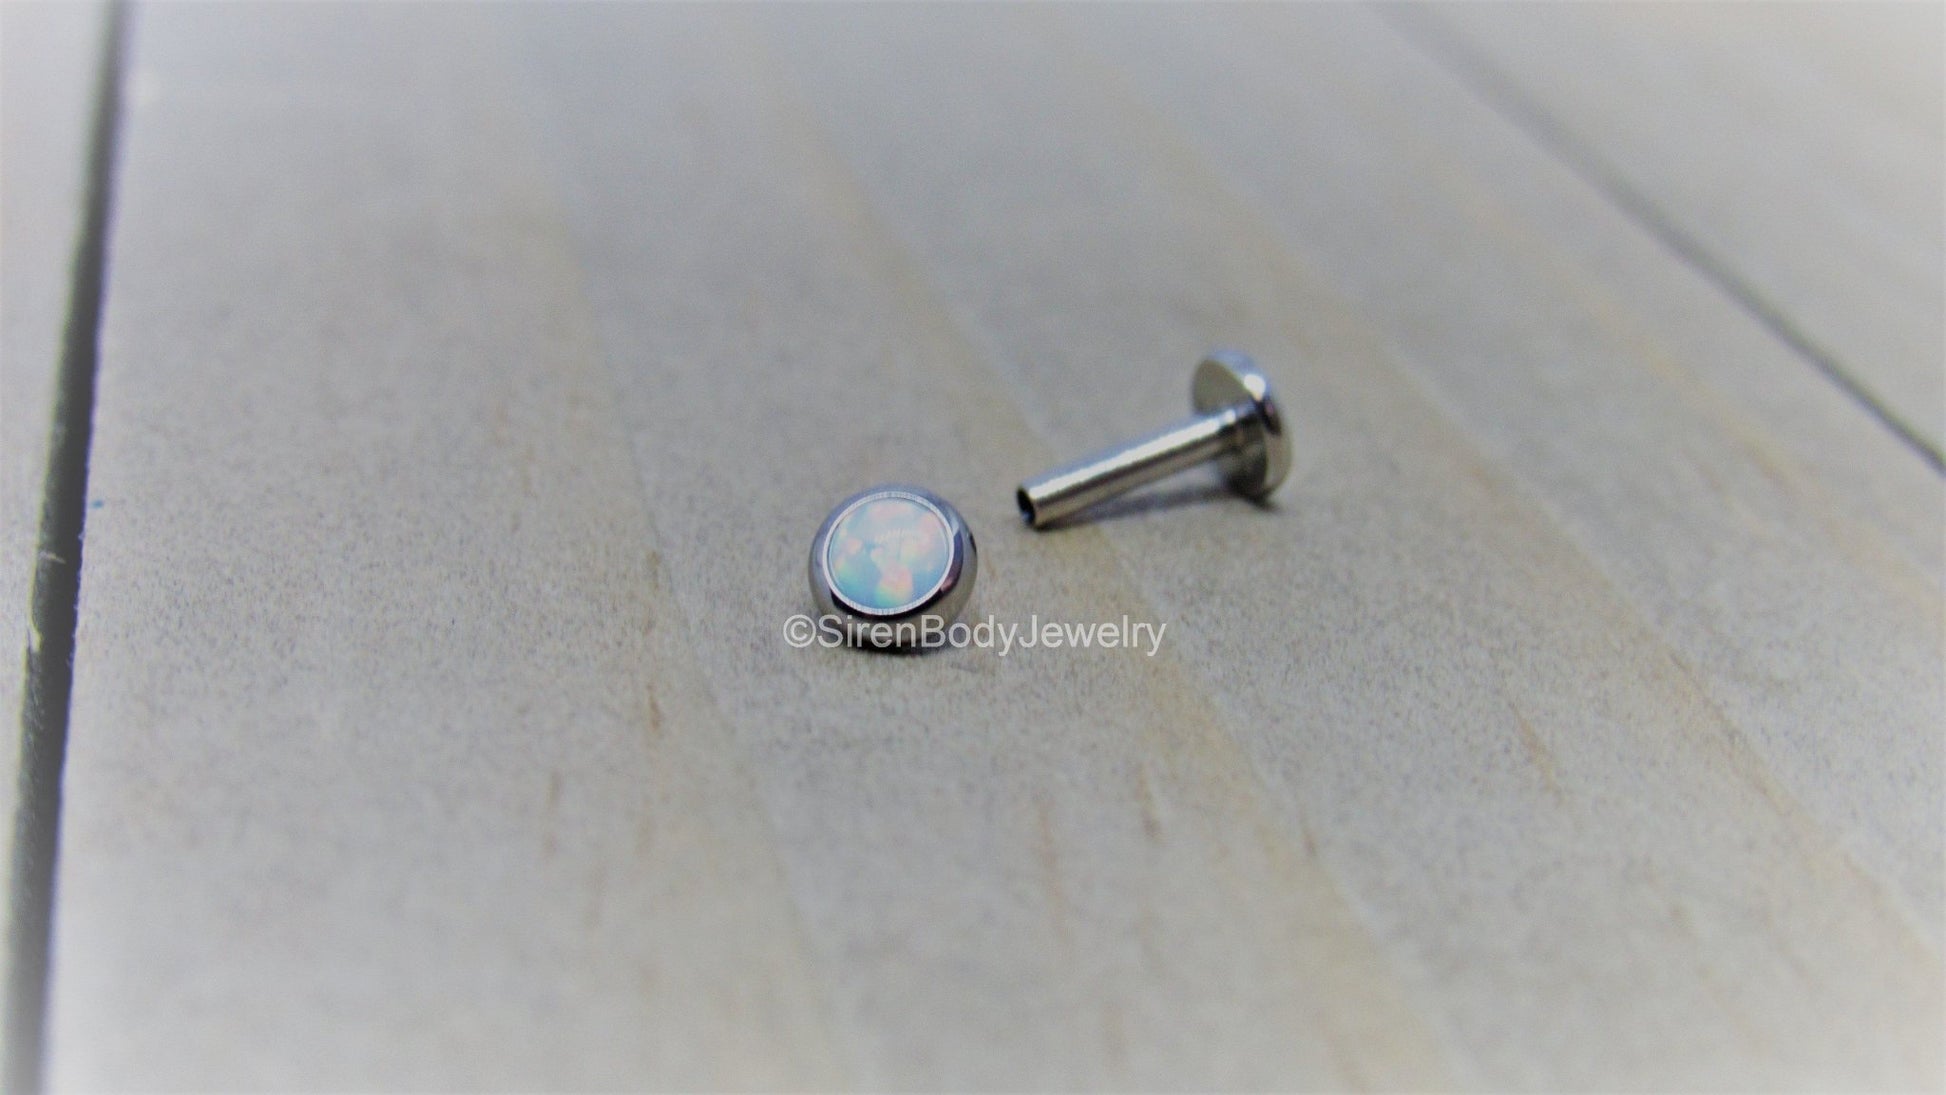 Opal flat back earrings 16g titanium internally threaded labret 4mm bezel set opals pair - SirenBodyJewelry